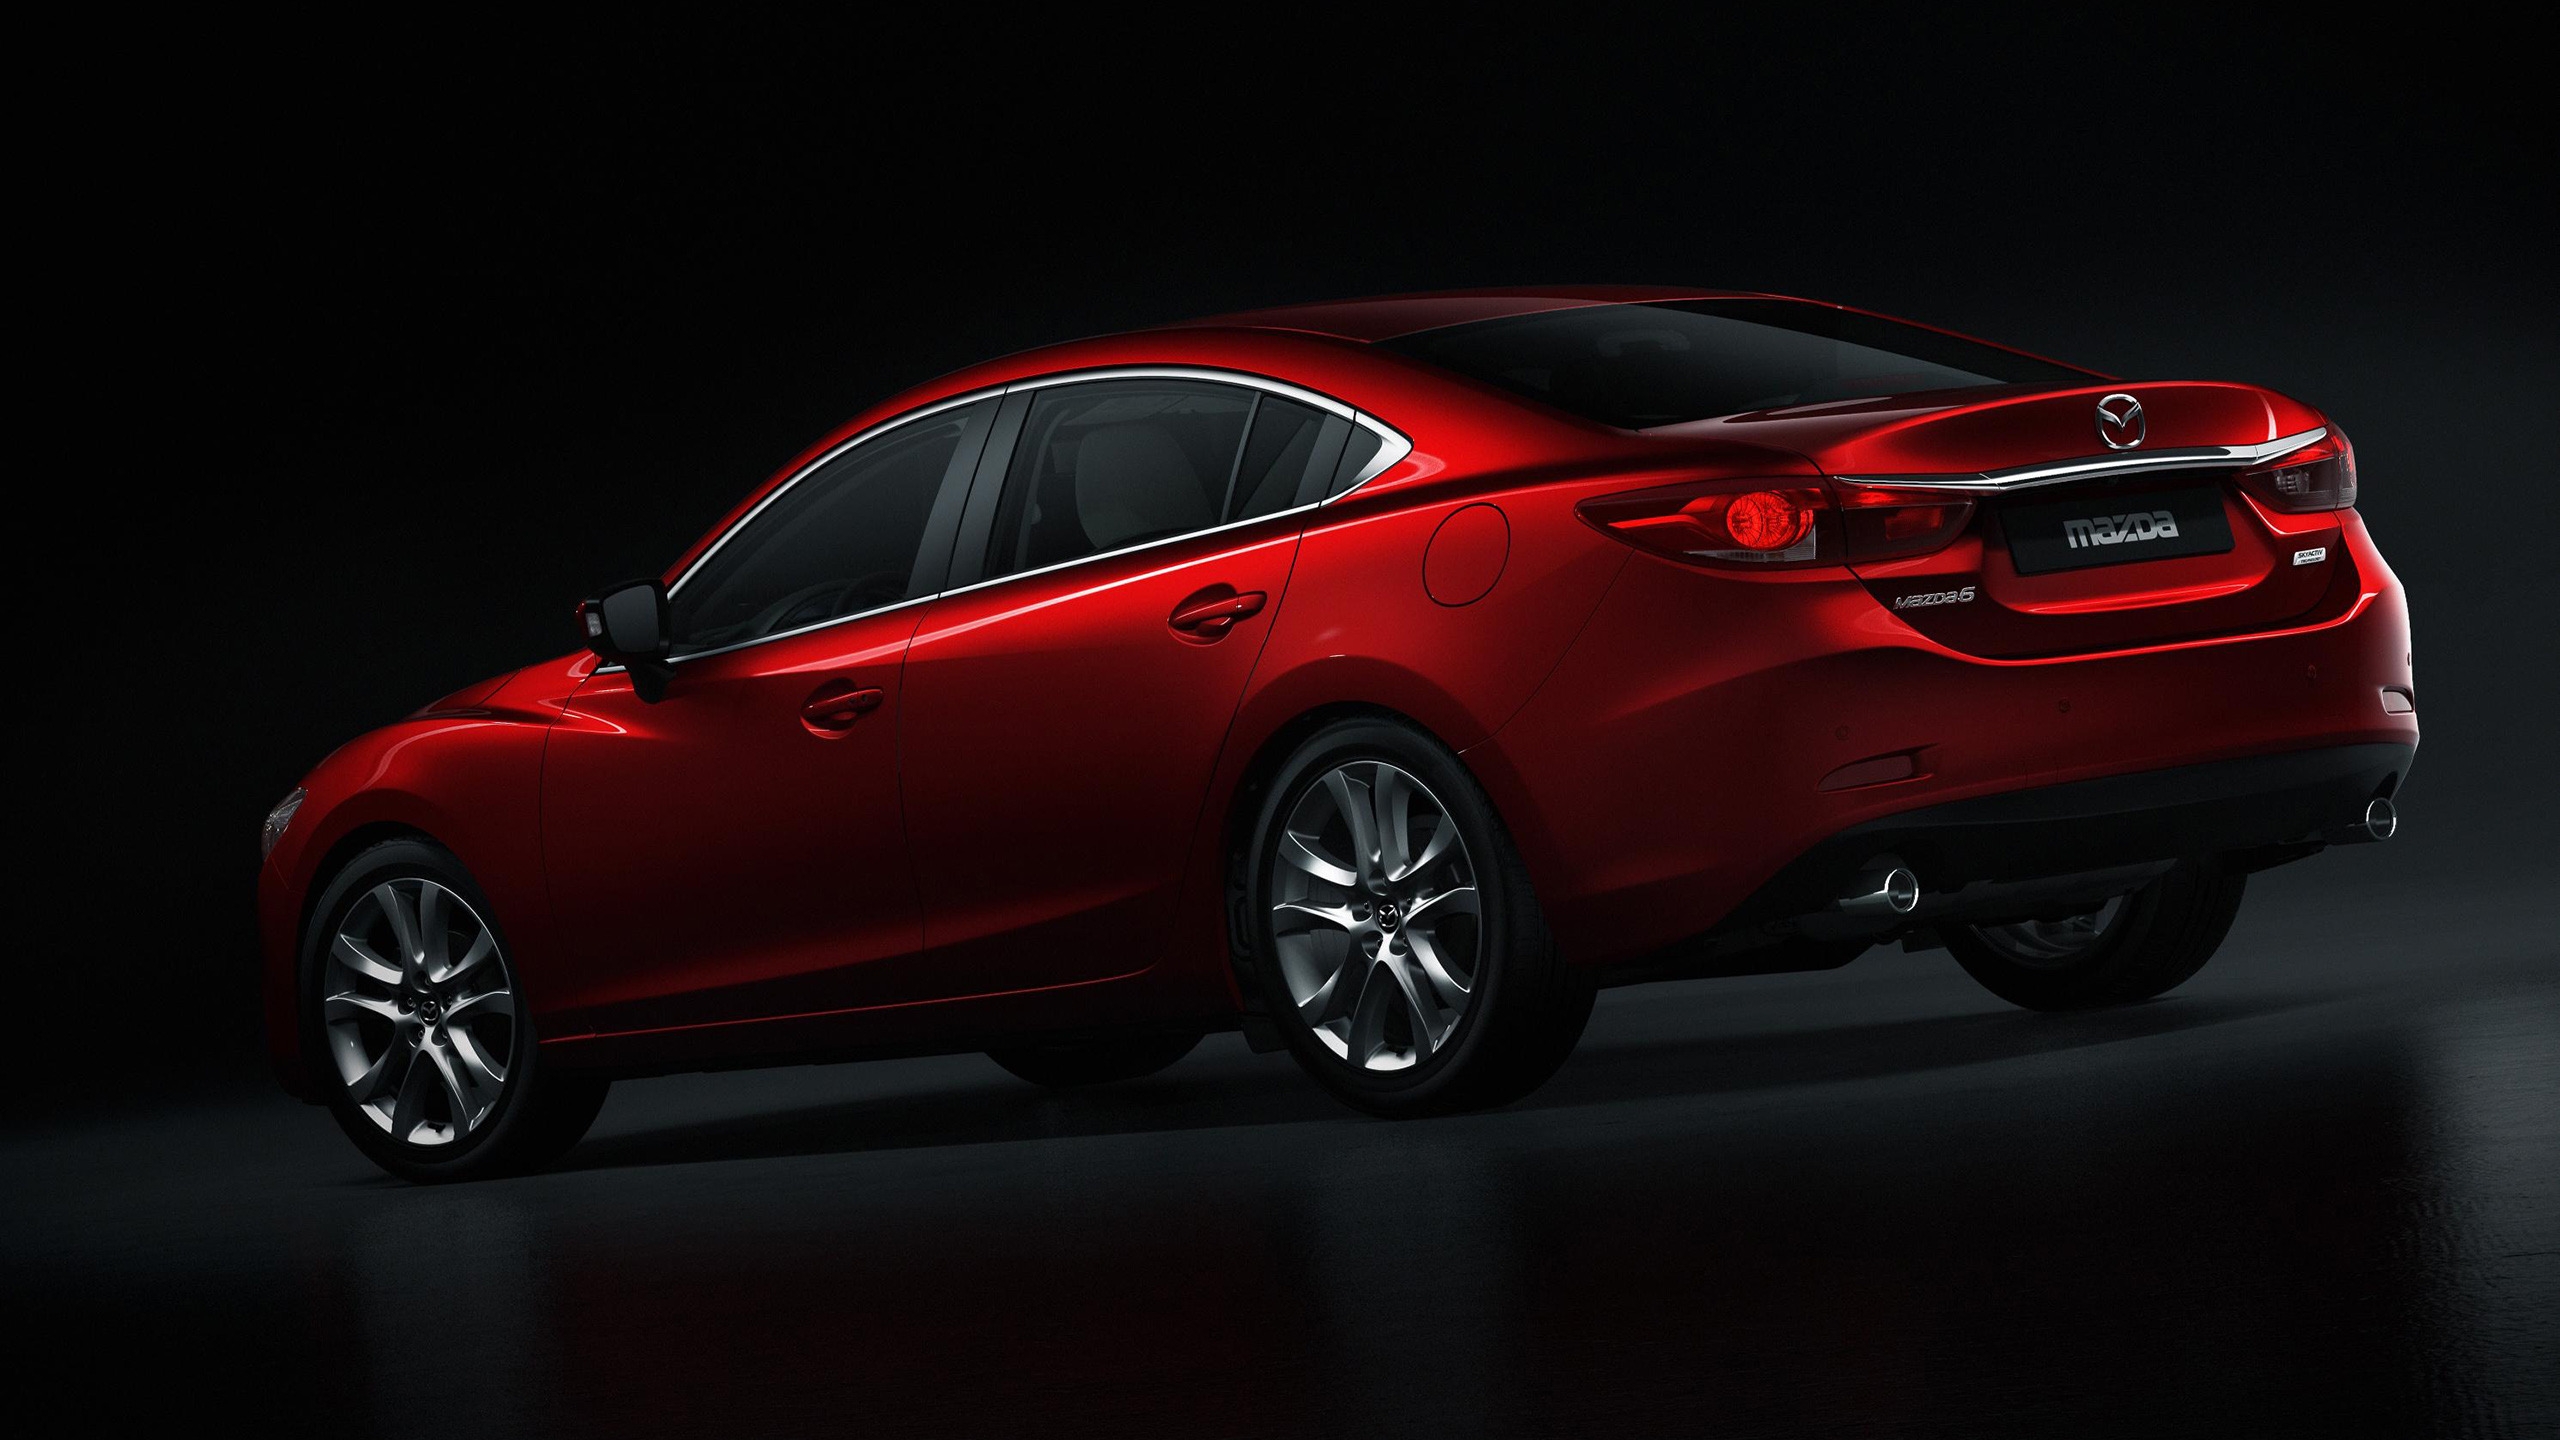 Mazda 6 2014 Rear Studio for 2560x1440 HDTV resolution